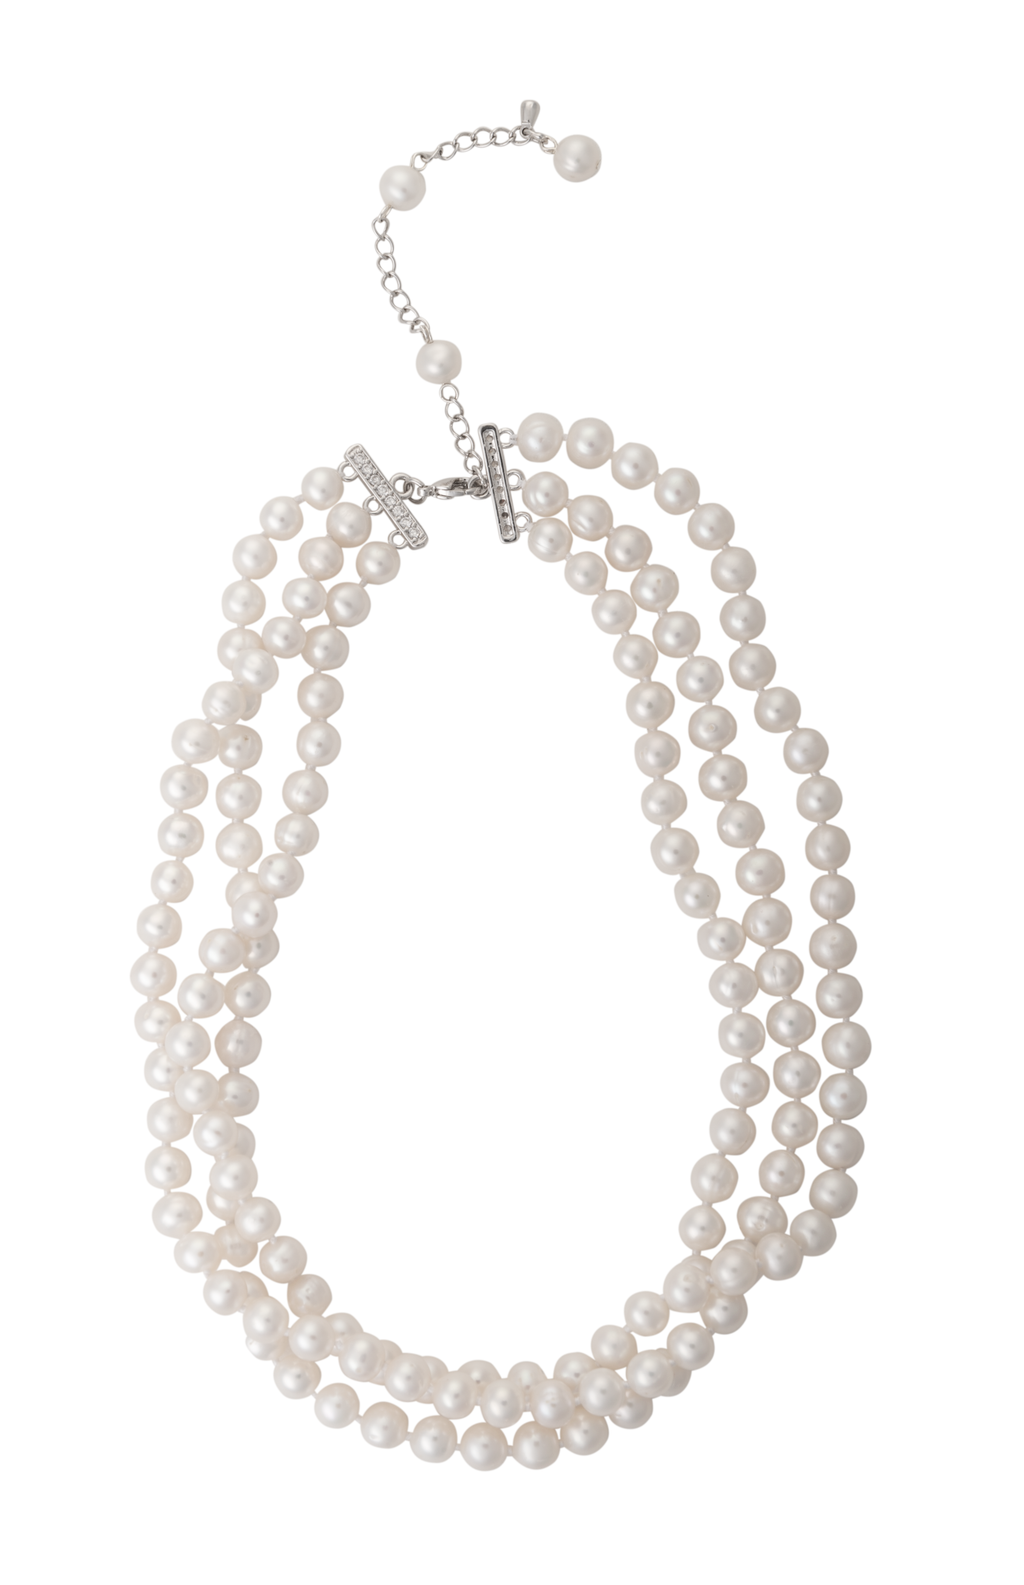 Three-strand adjustable pearl choker